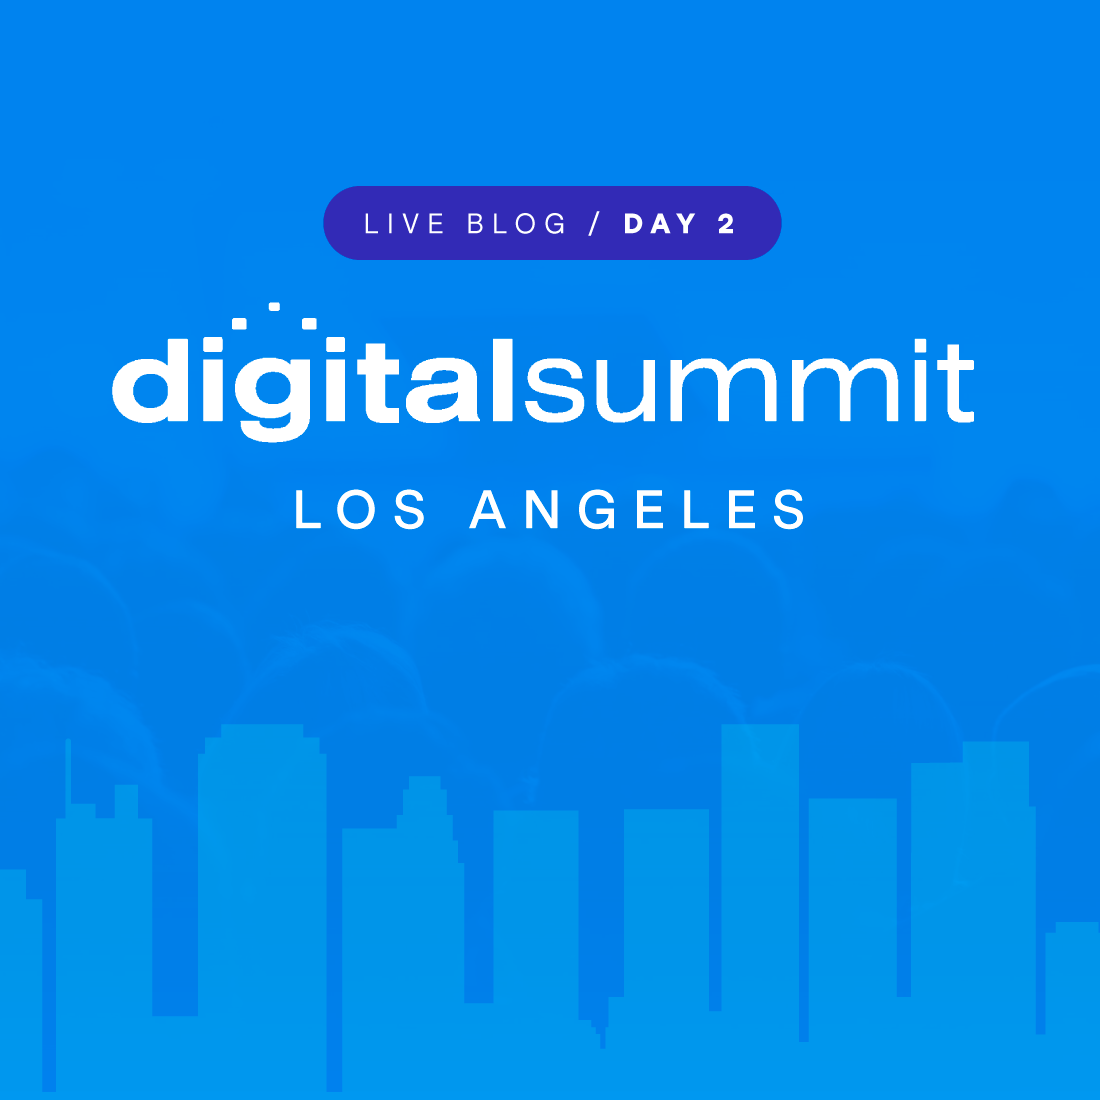 Digital Summit Los Angeles Day 2 Live Blog